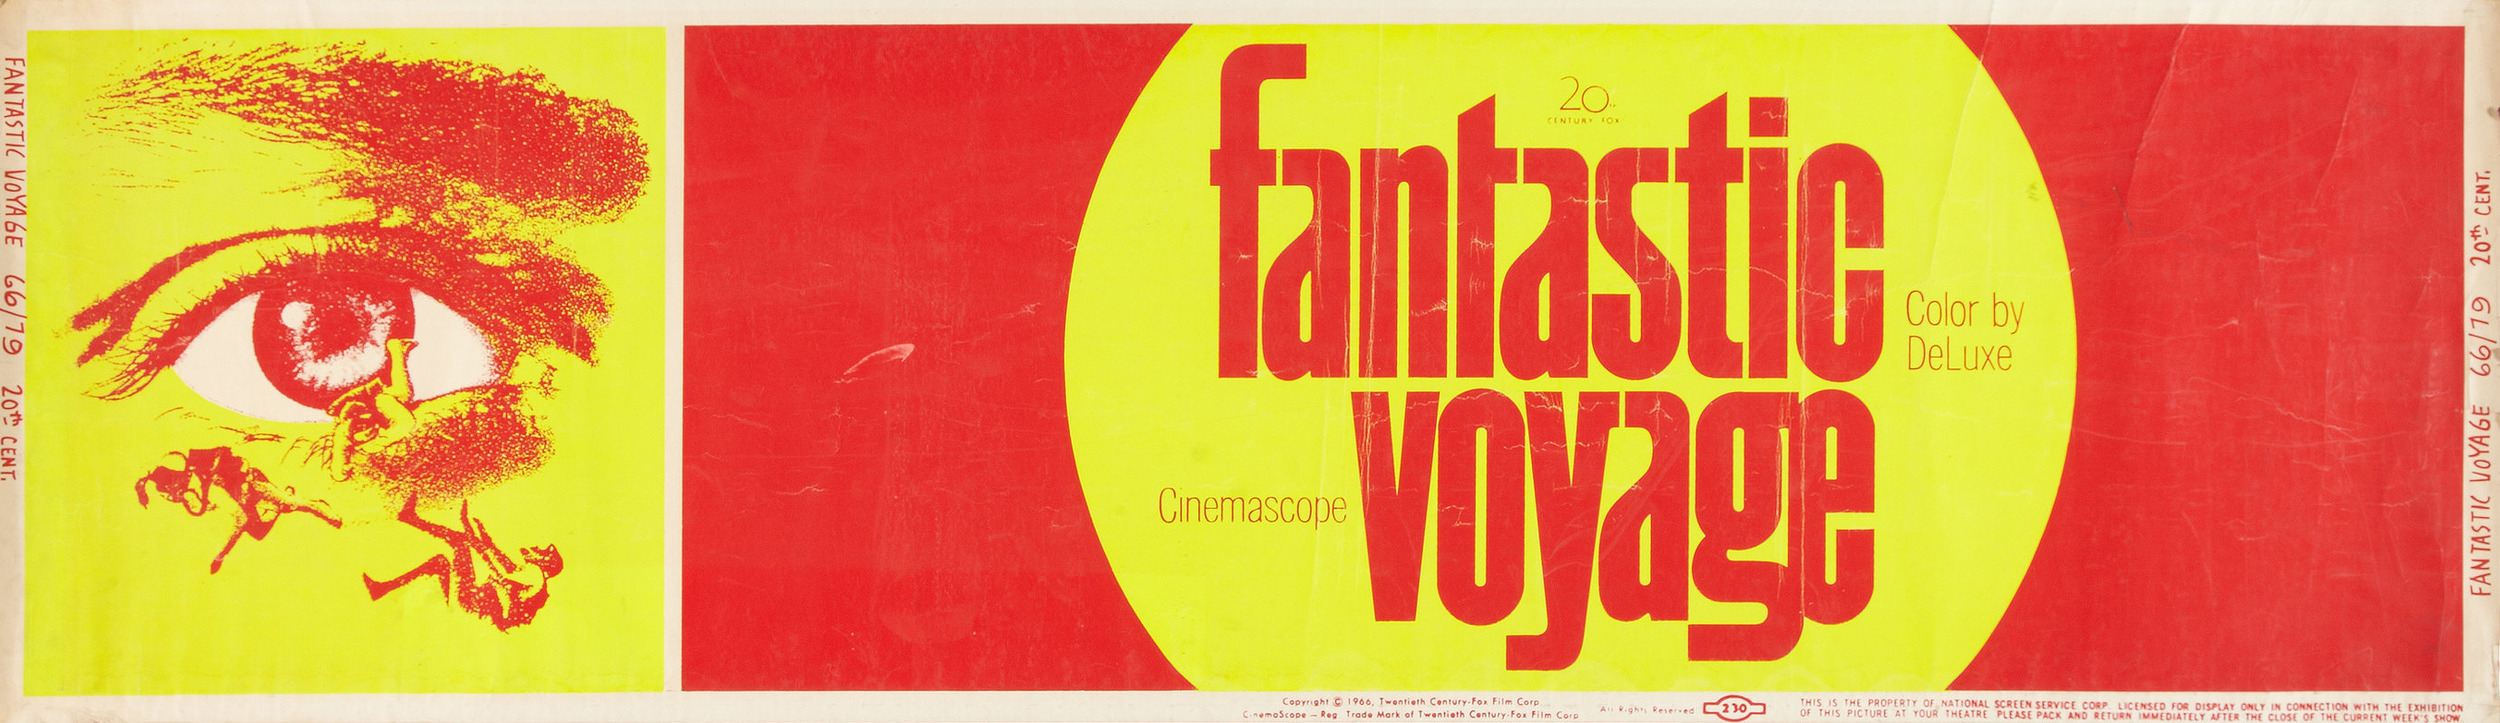 Mega Sized Movie Poster Image for Fantastic Voyage (#5 of 8)